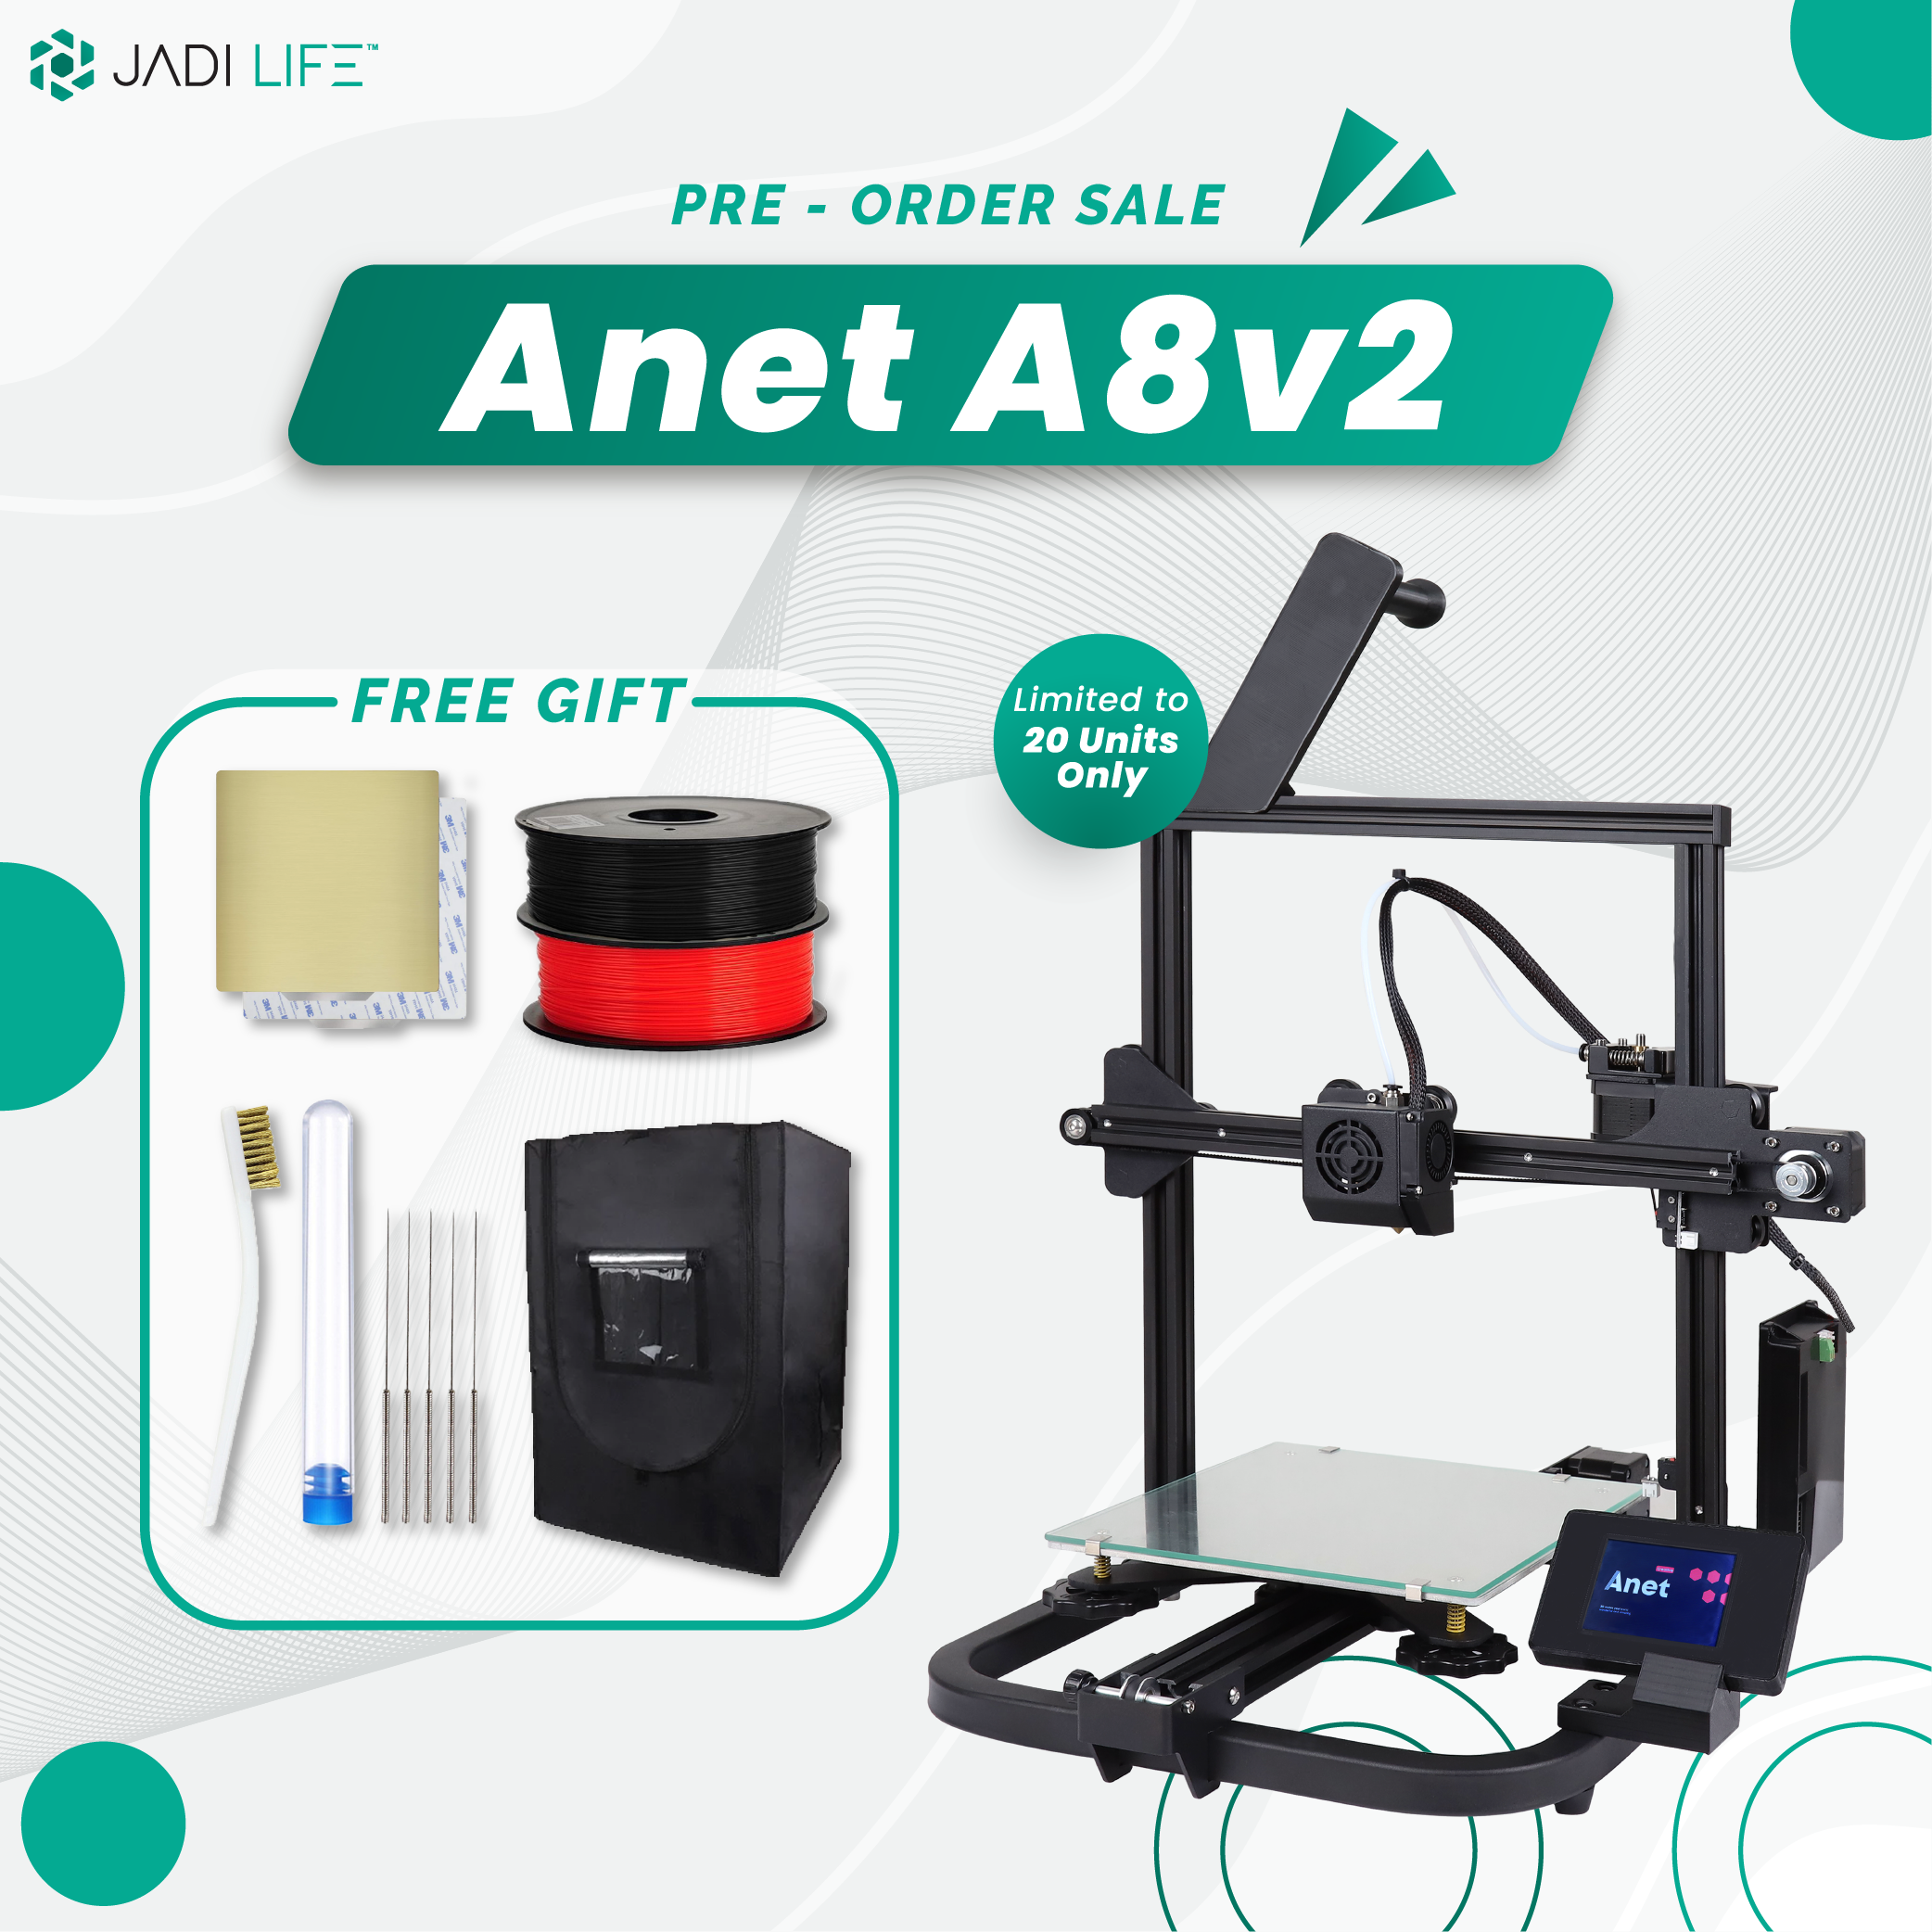 (Pre-Order) Anet A8 V2 High Precision 3D Printer - Limited Edition